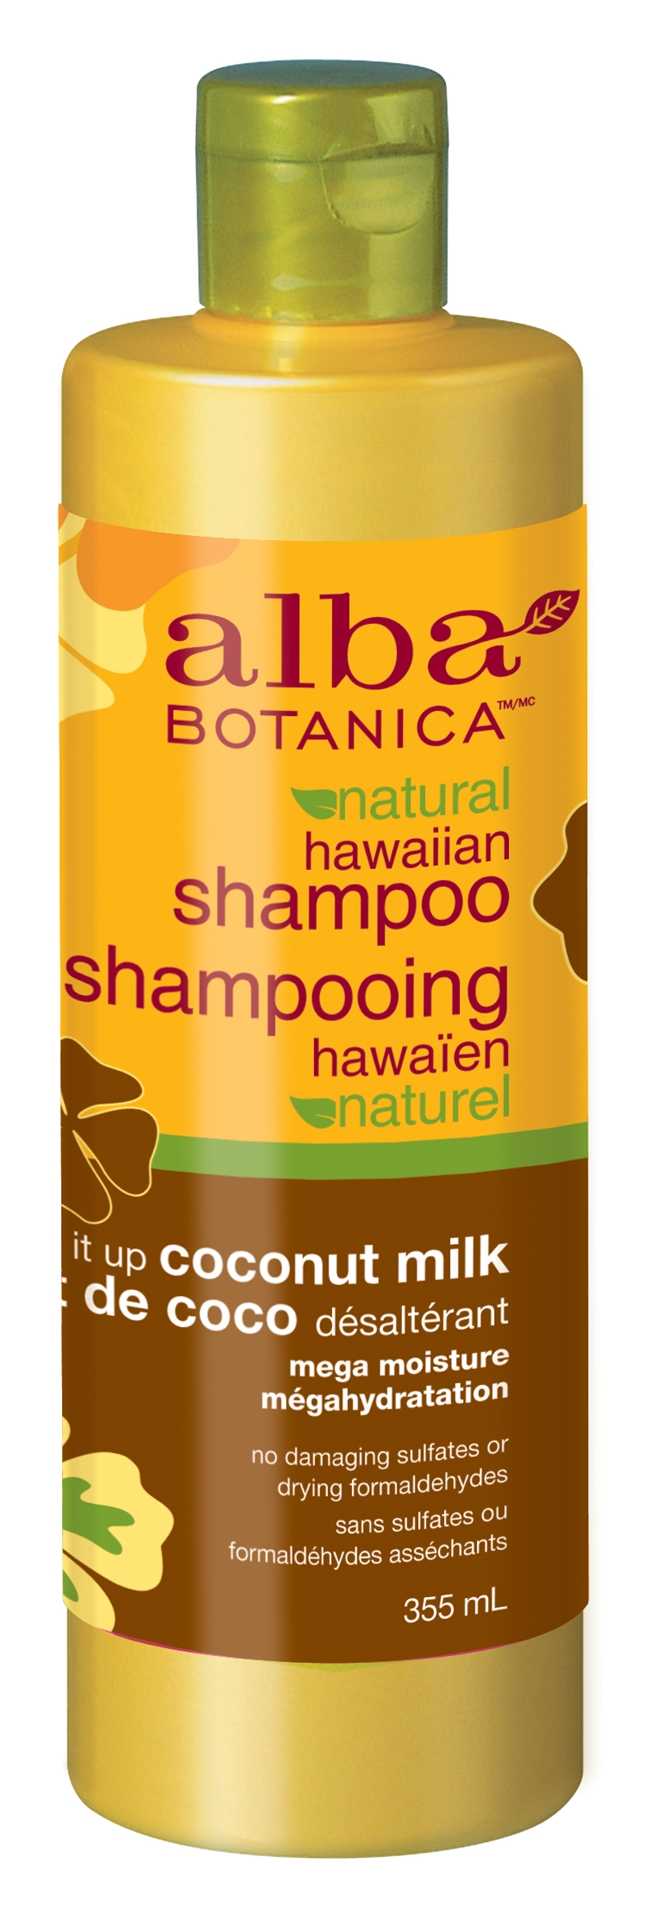 Alba Botanica Hawaiian Shampoo, Coconut Milk 355ml | BuyWell.com ...